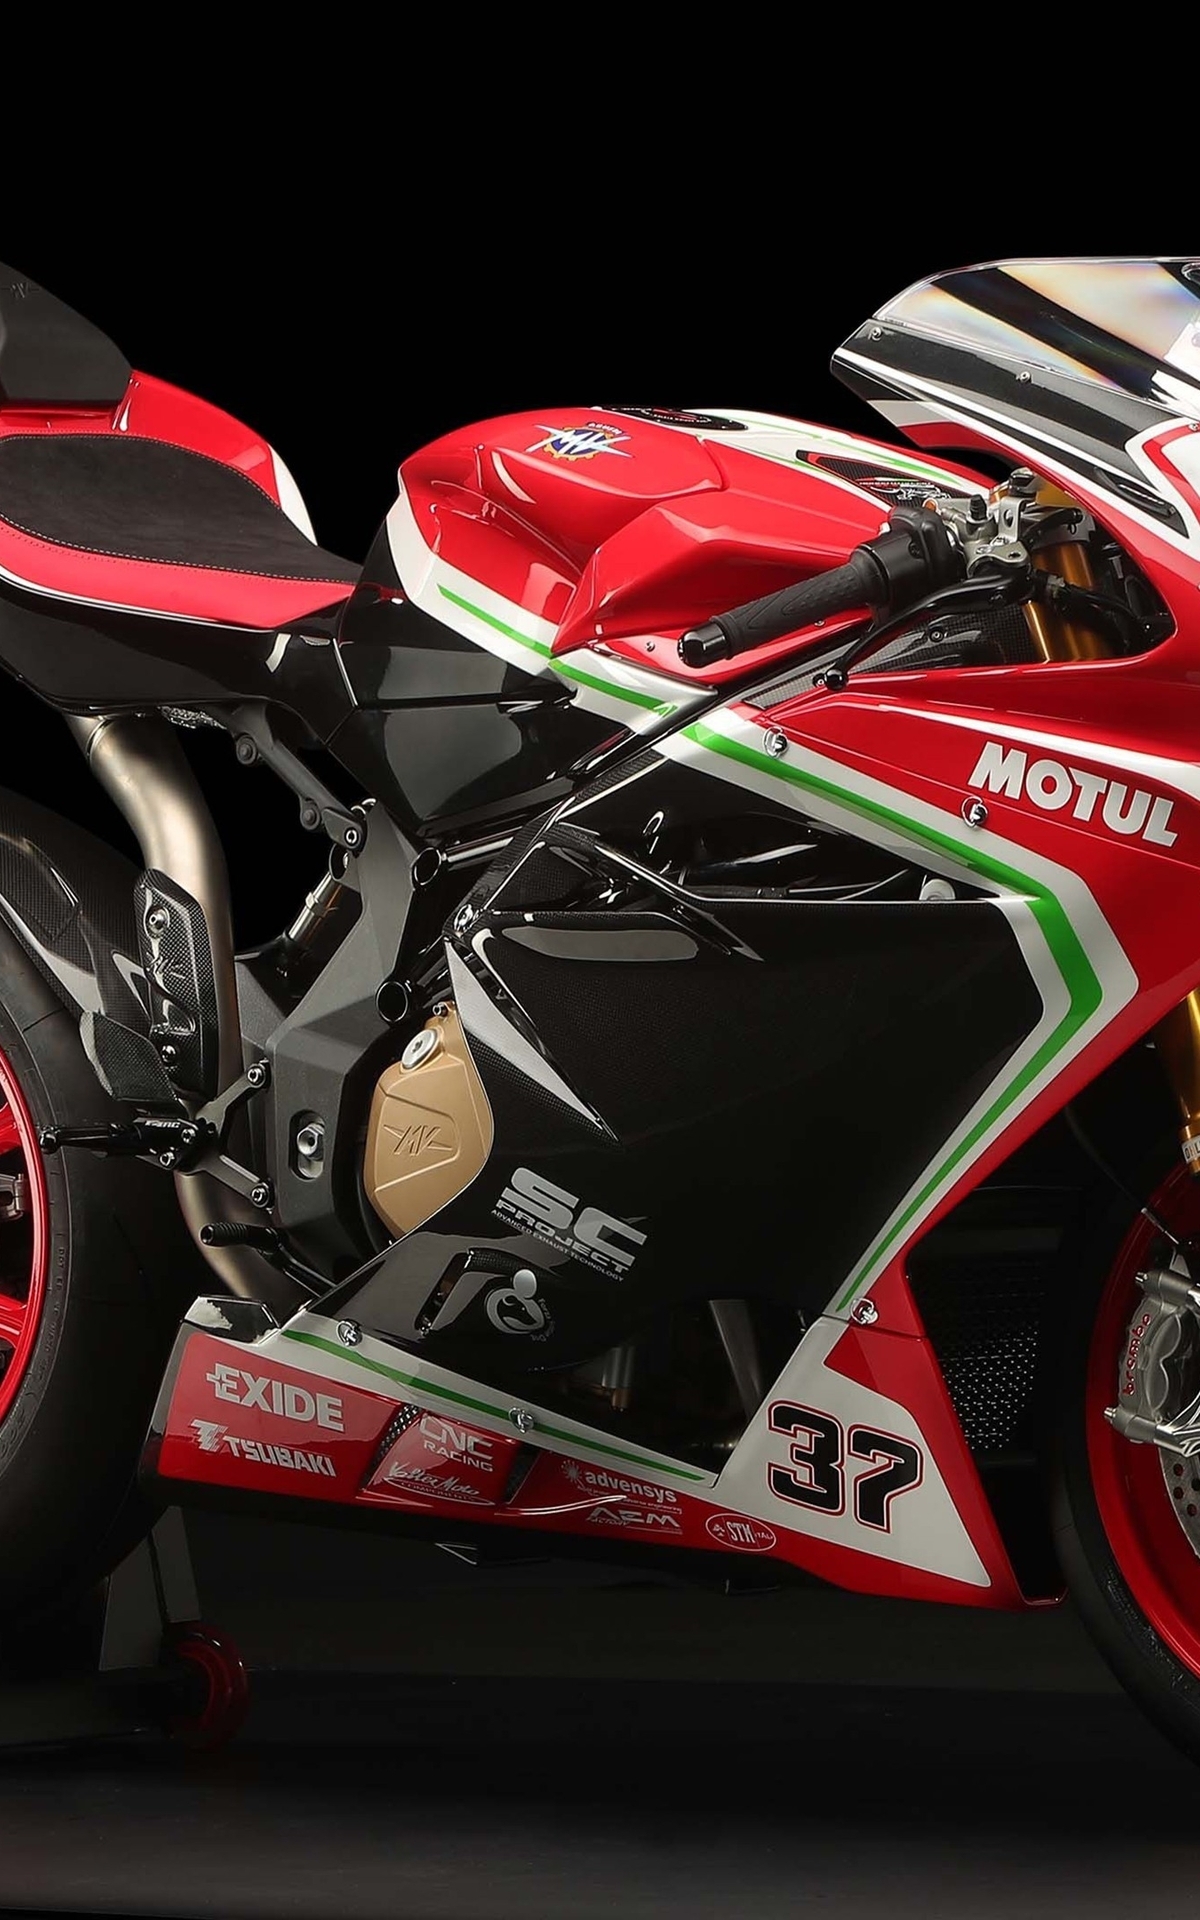 Image: Motorcycle, MV Agusta, F4, series, dark background, red